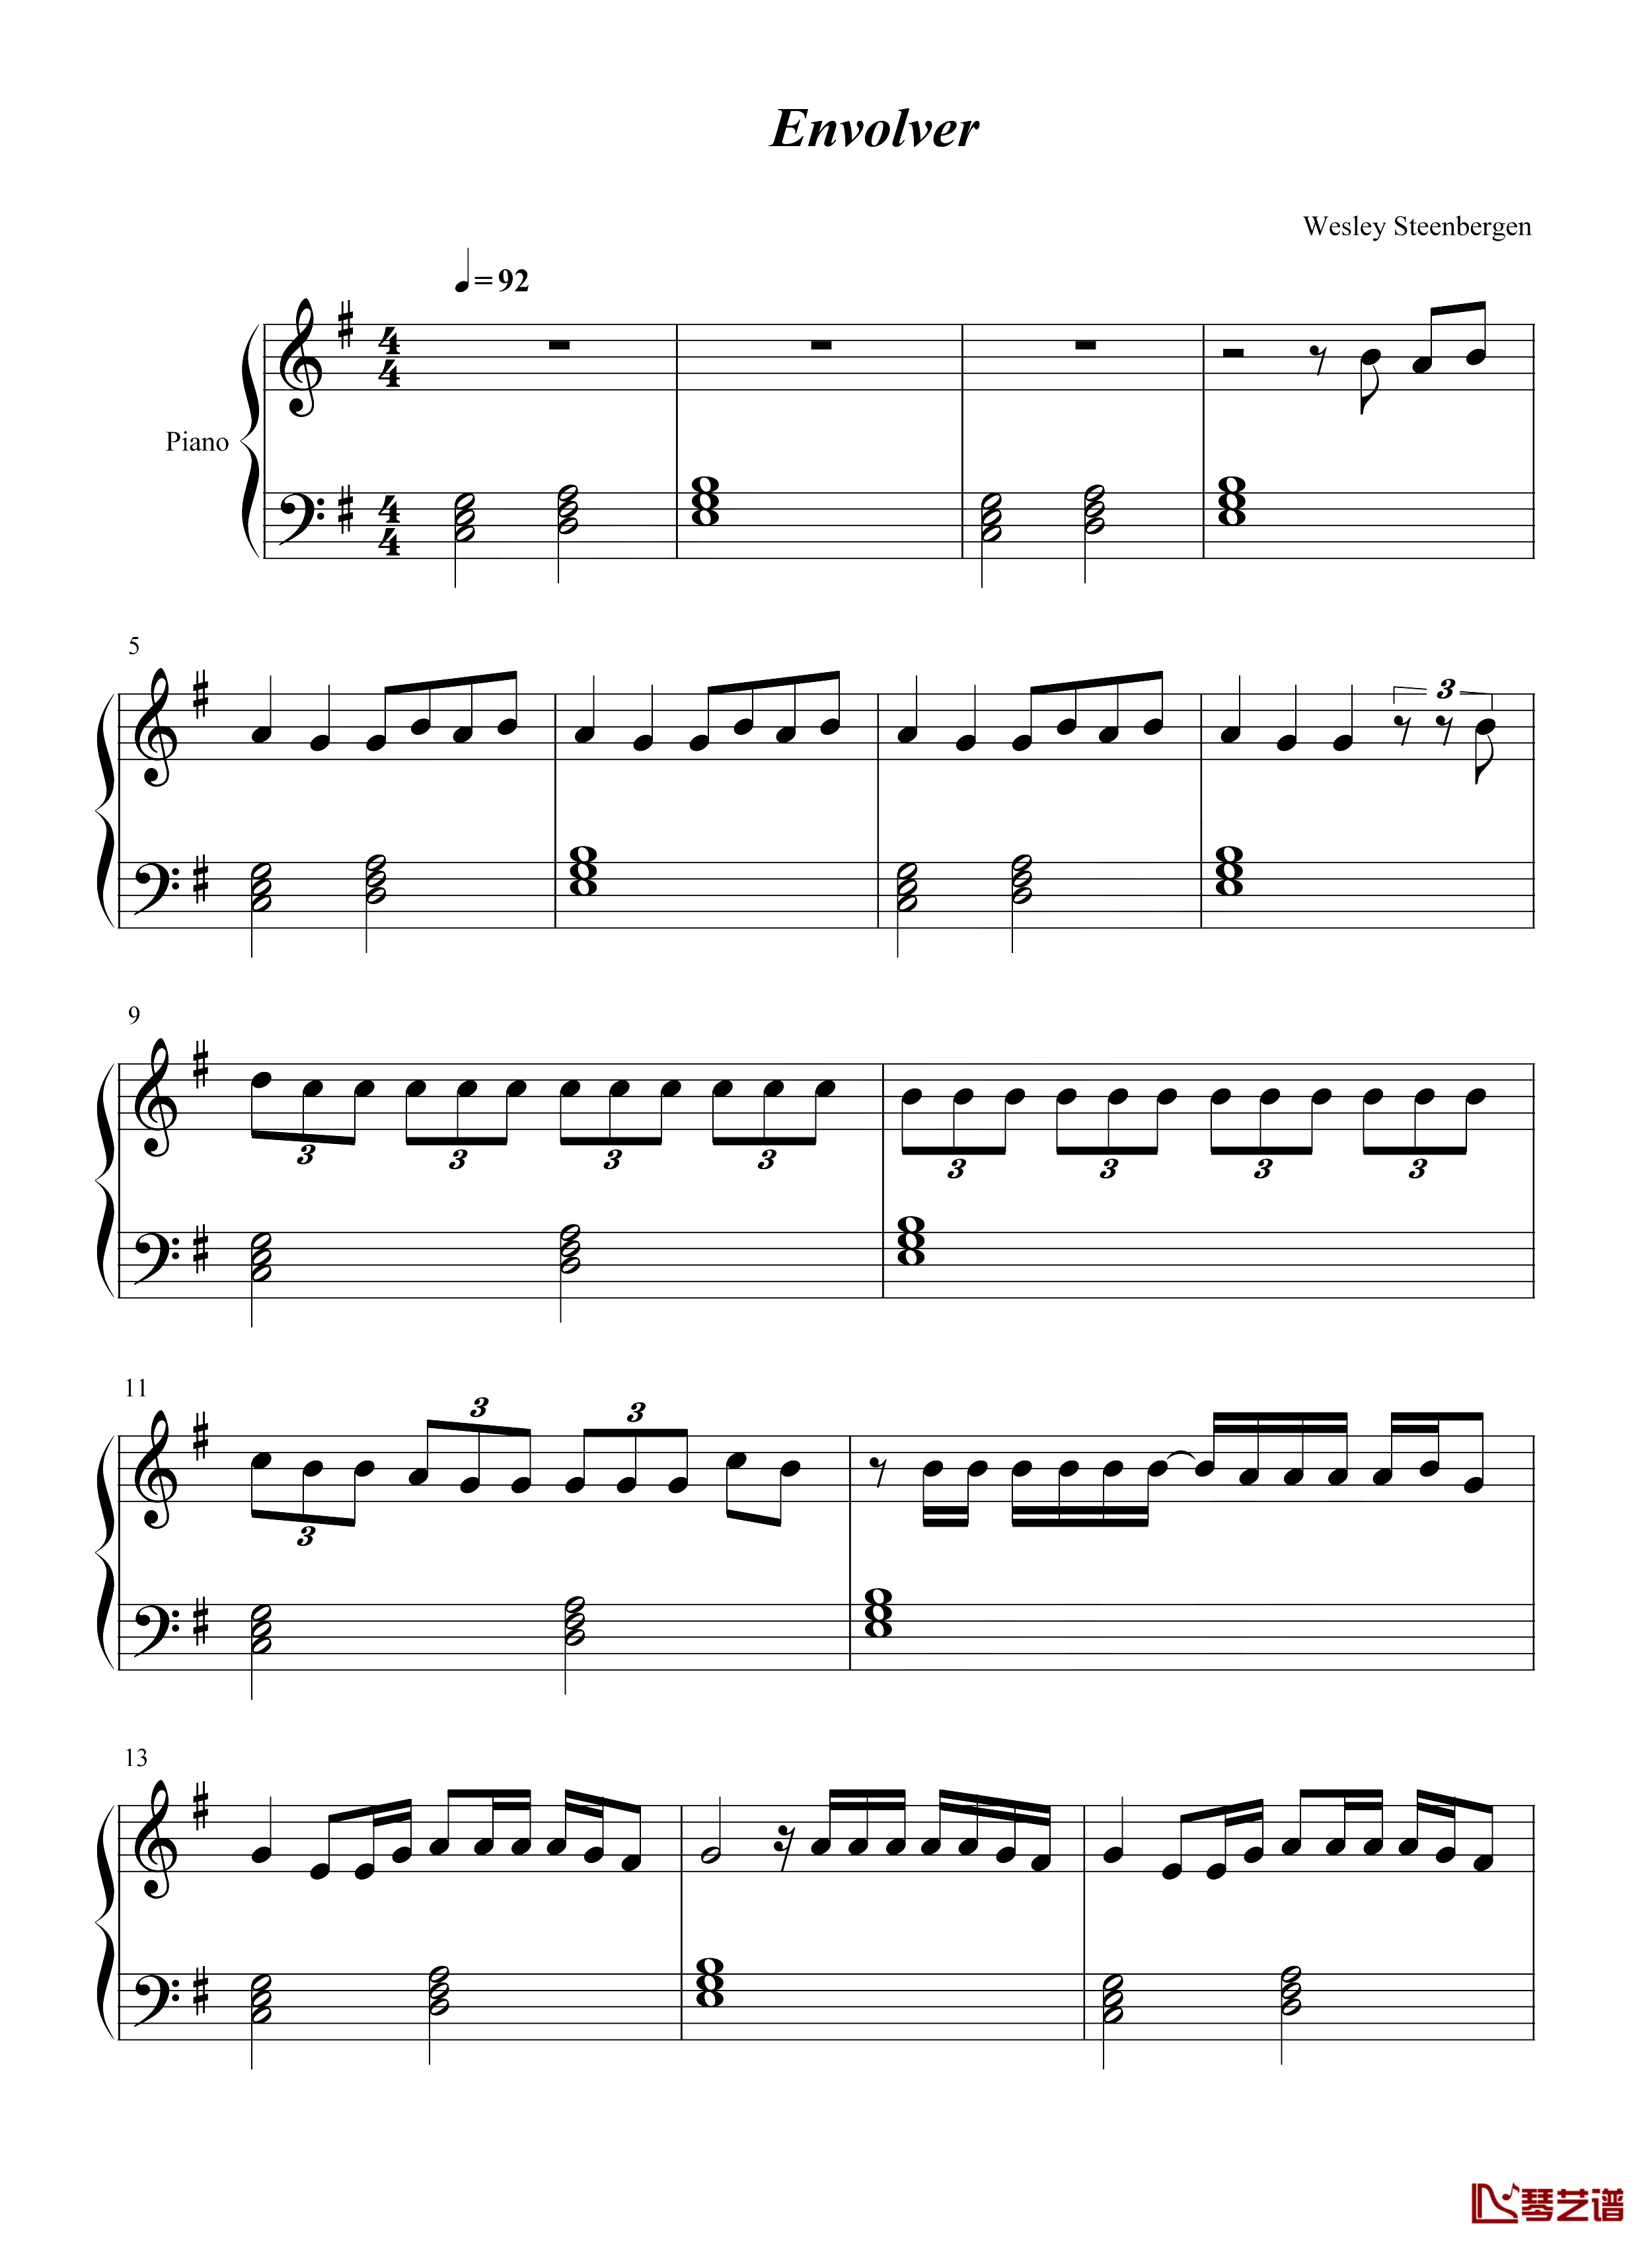 Envolver钢琴谱-Anitta-YouTube全球音乐榜前10名之一歌曲1